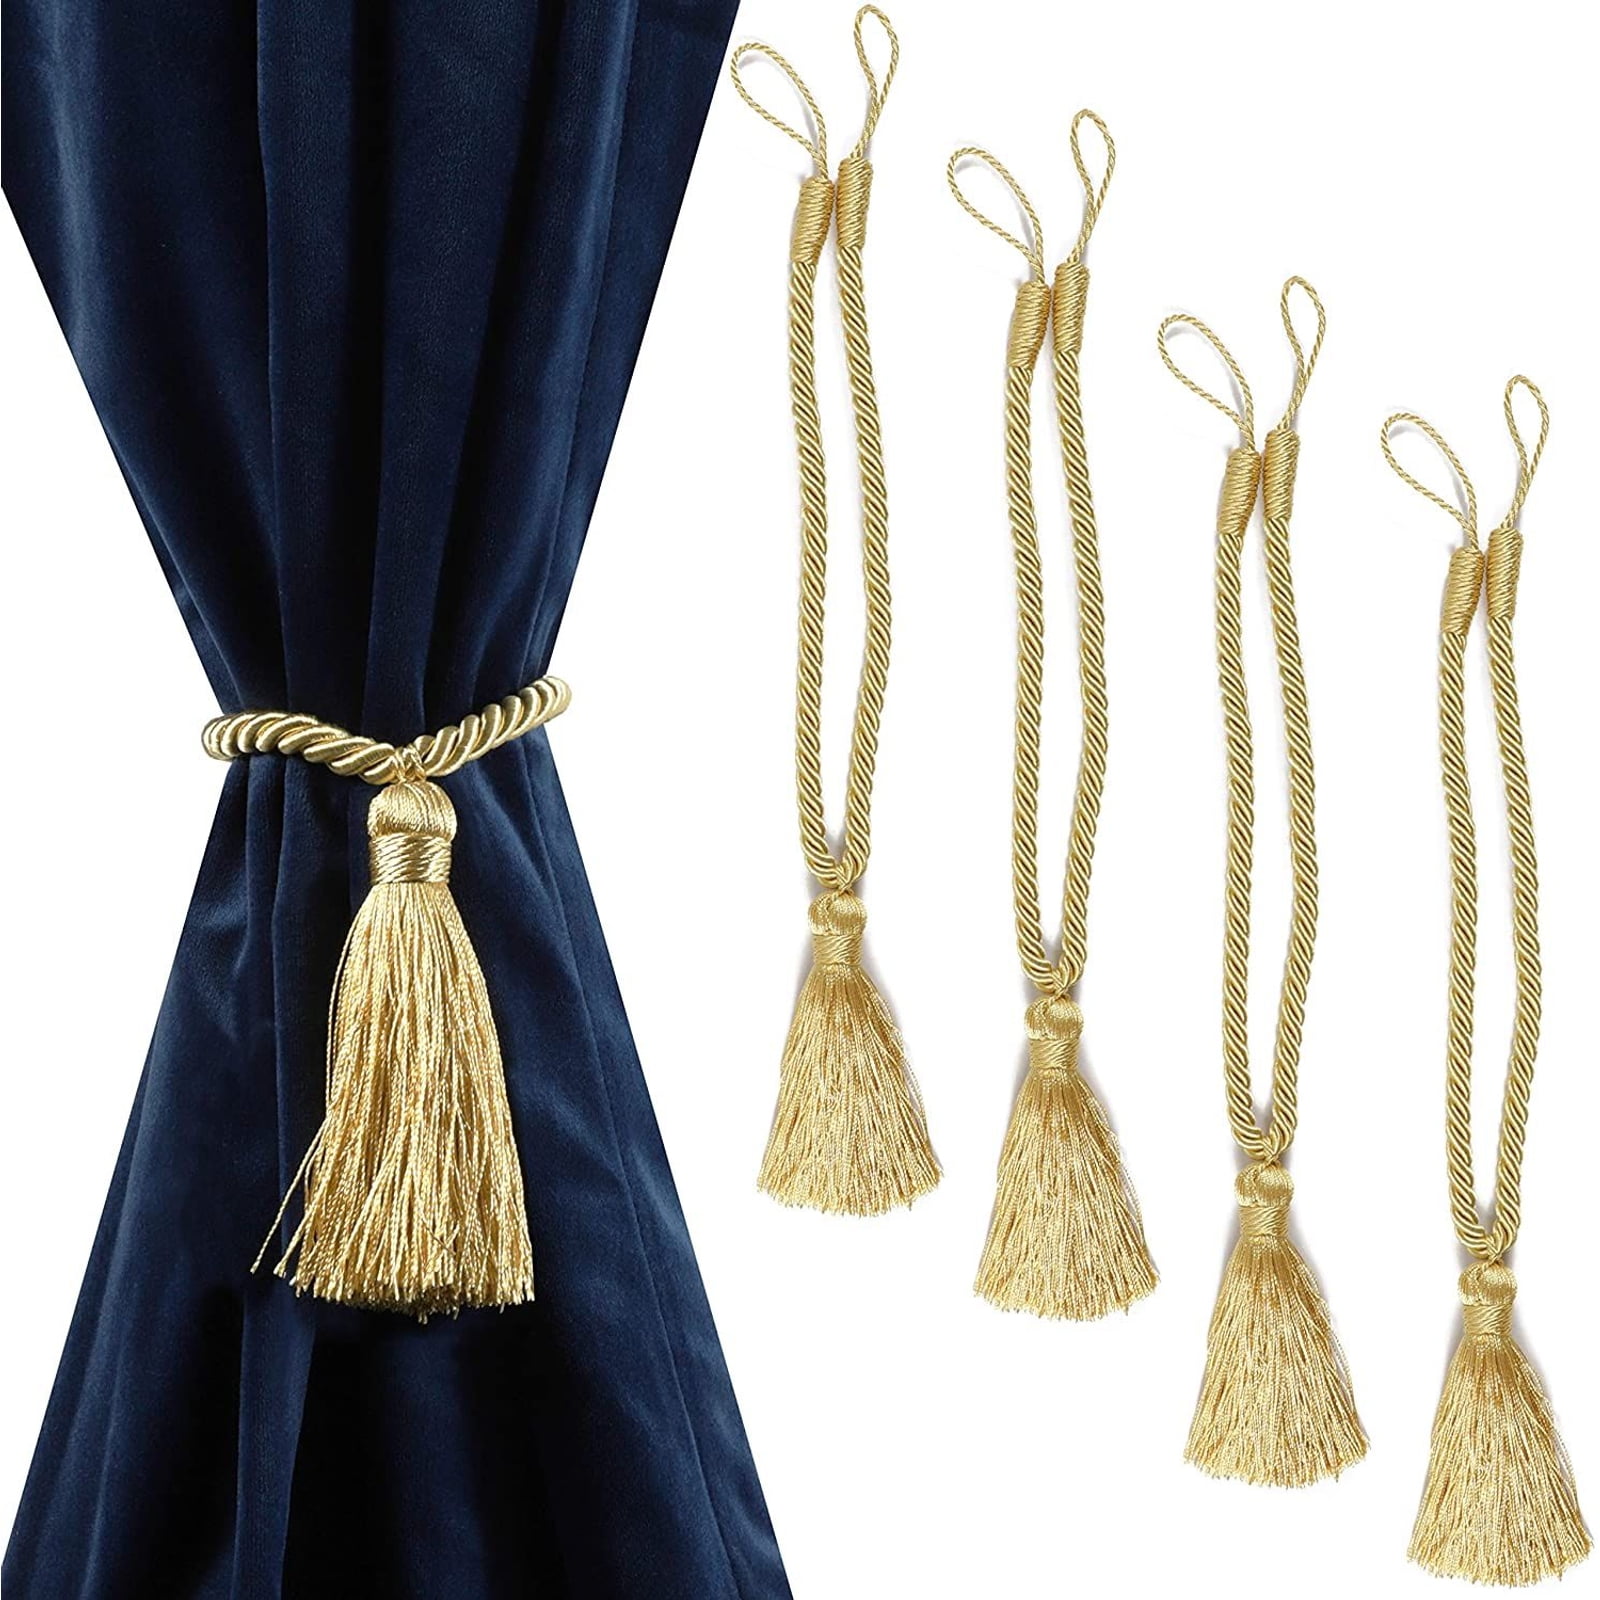 4 X SELF ADHESIVE Gold Curtain Tie Back Hooks Stick On Tassel/Rope/Cord Holder 